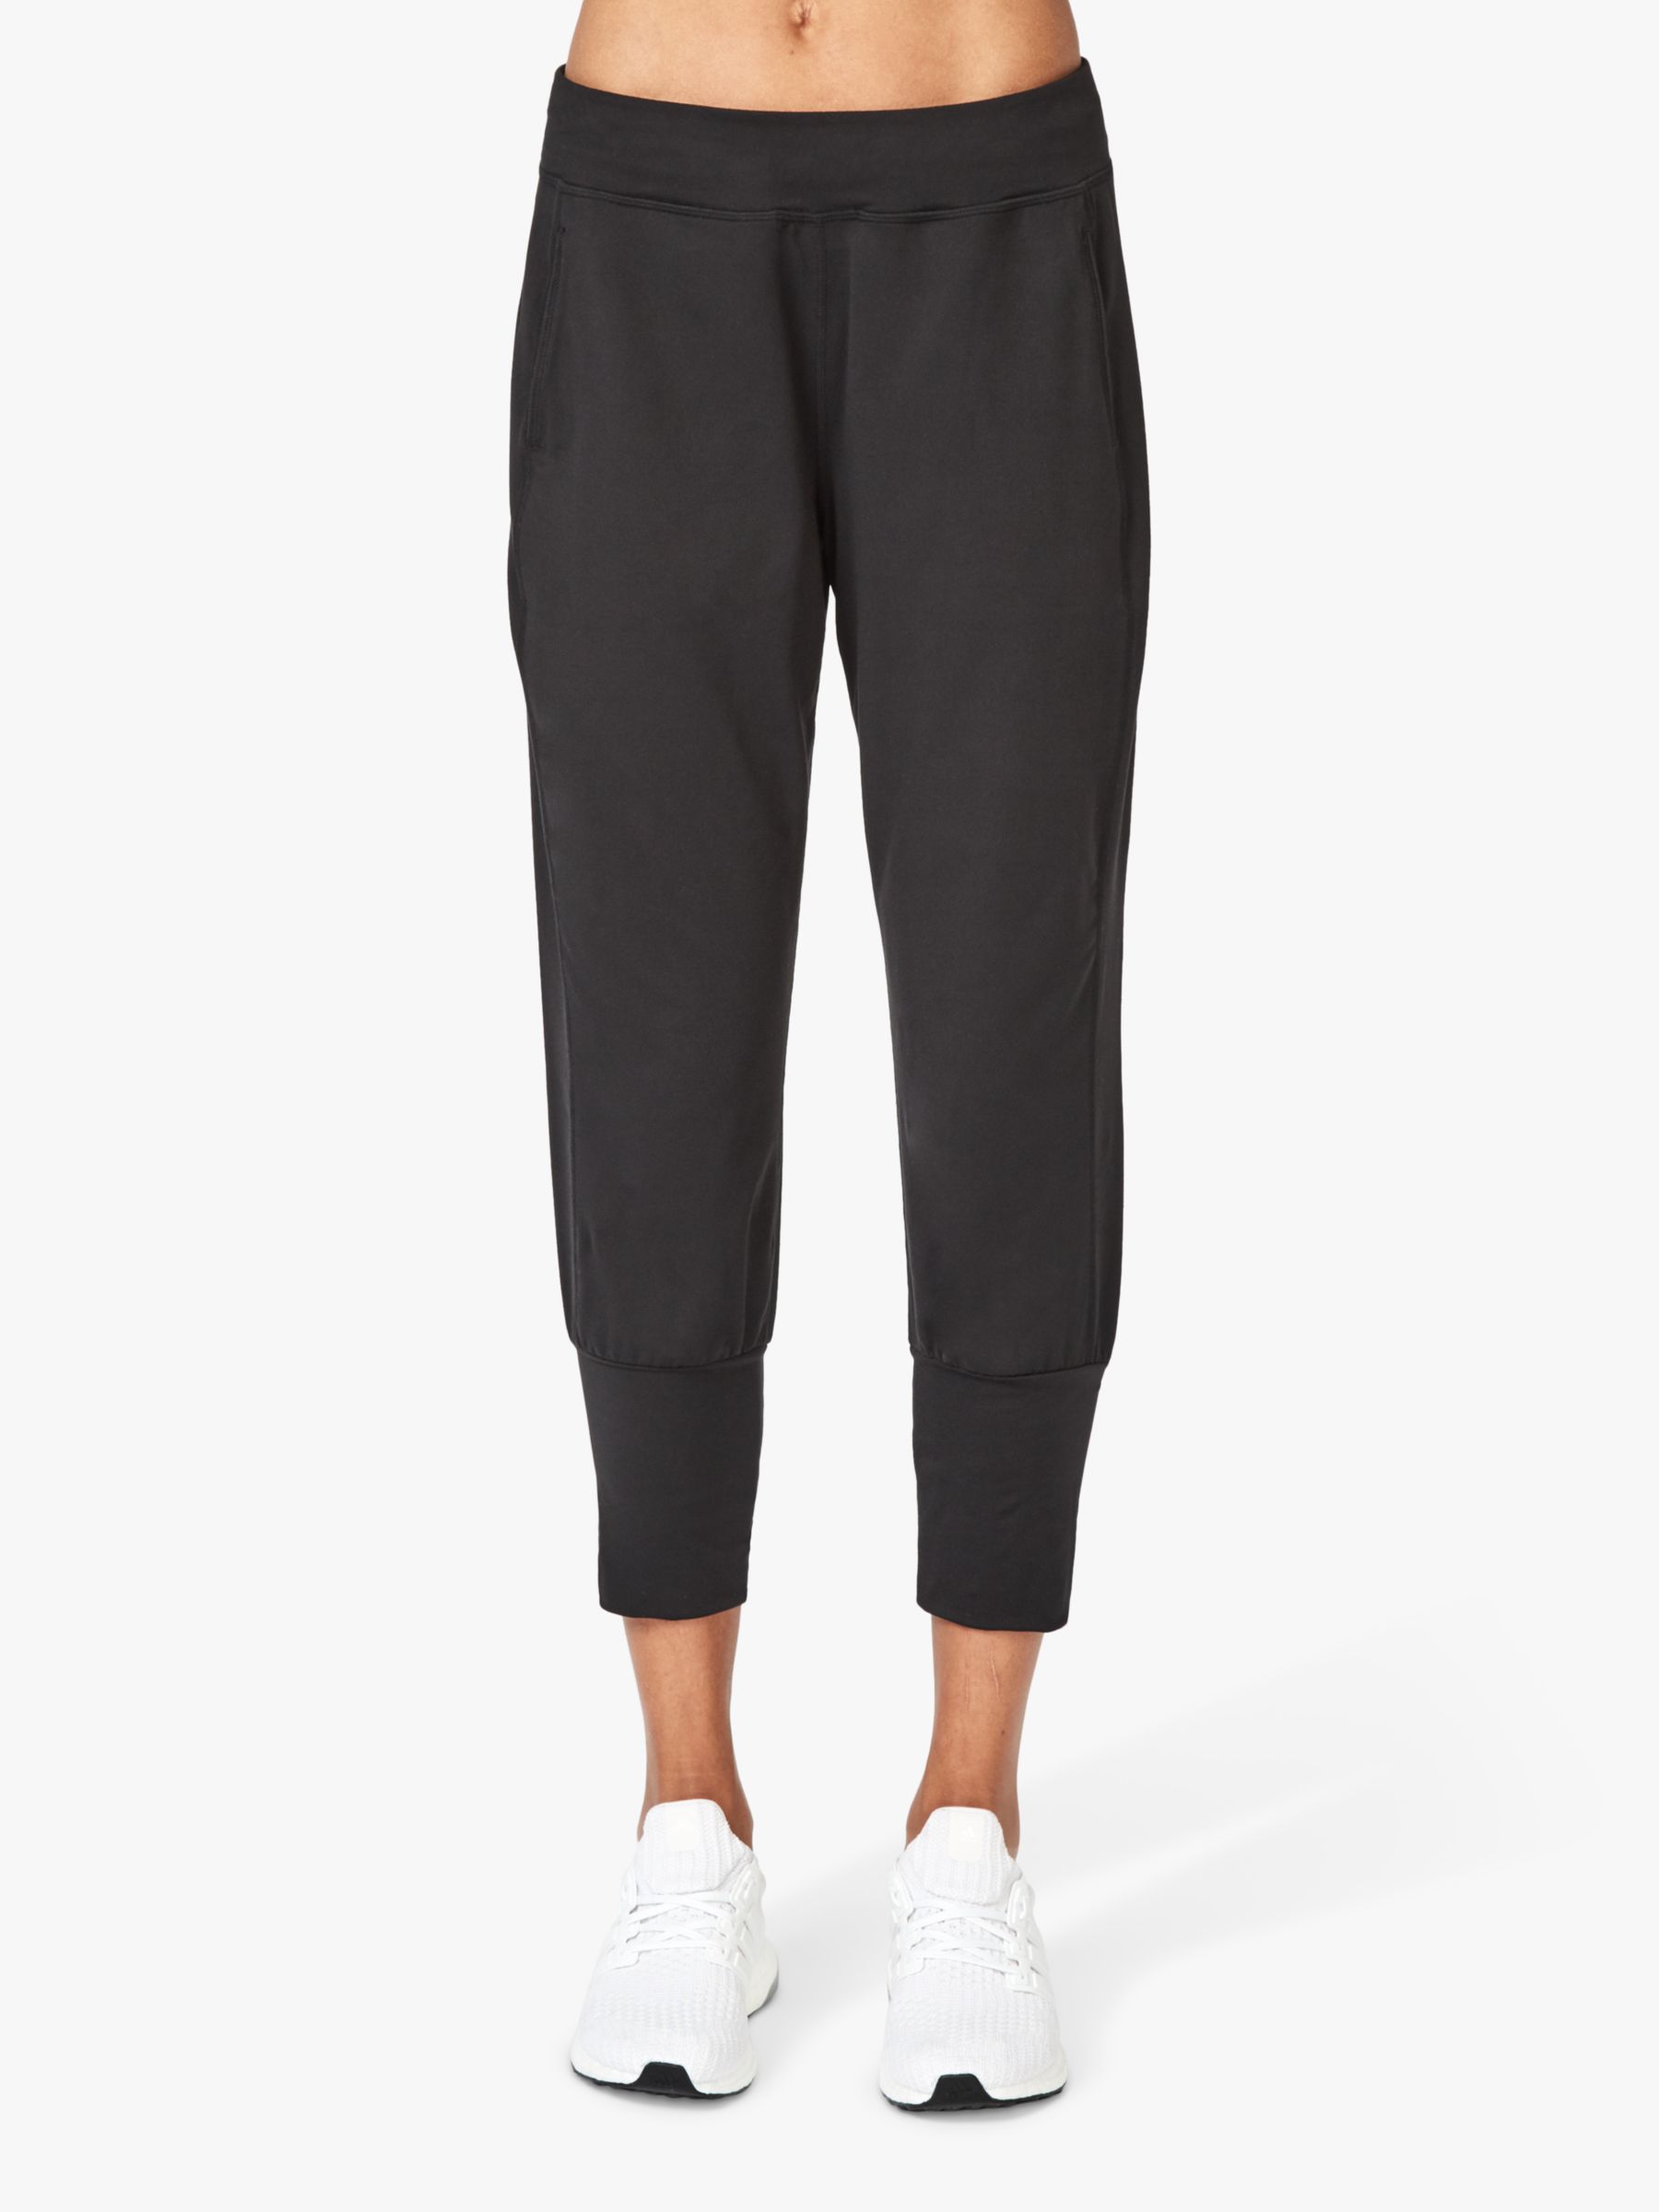 Sweaty Betty Gary Cropped Yoga Pants, Black at John Lewis & Partners